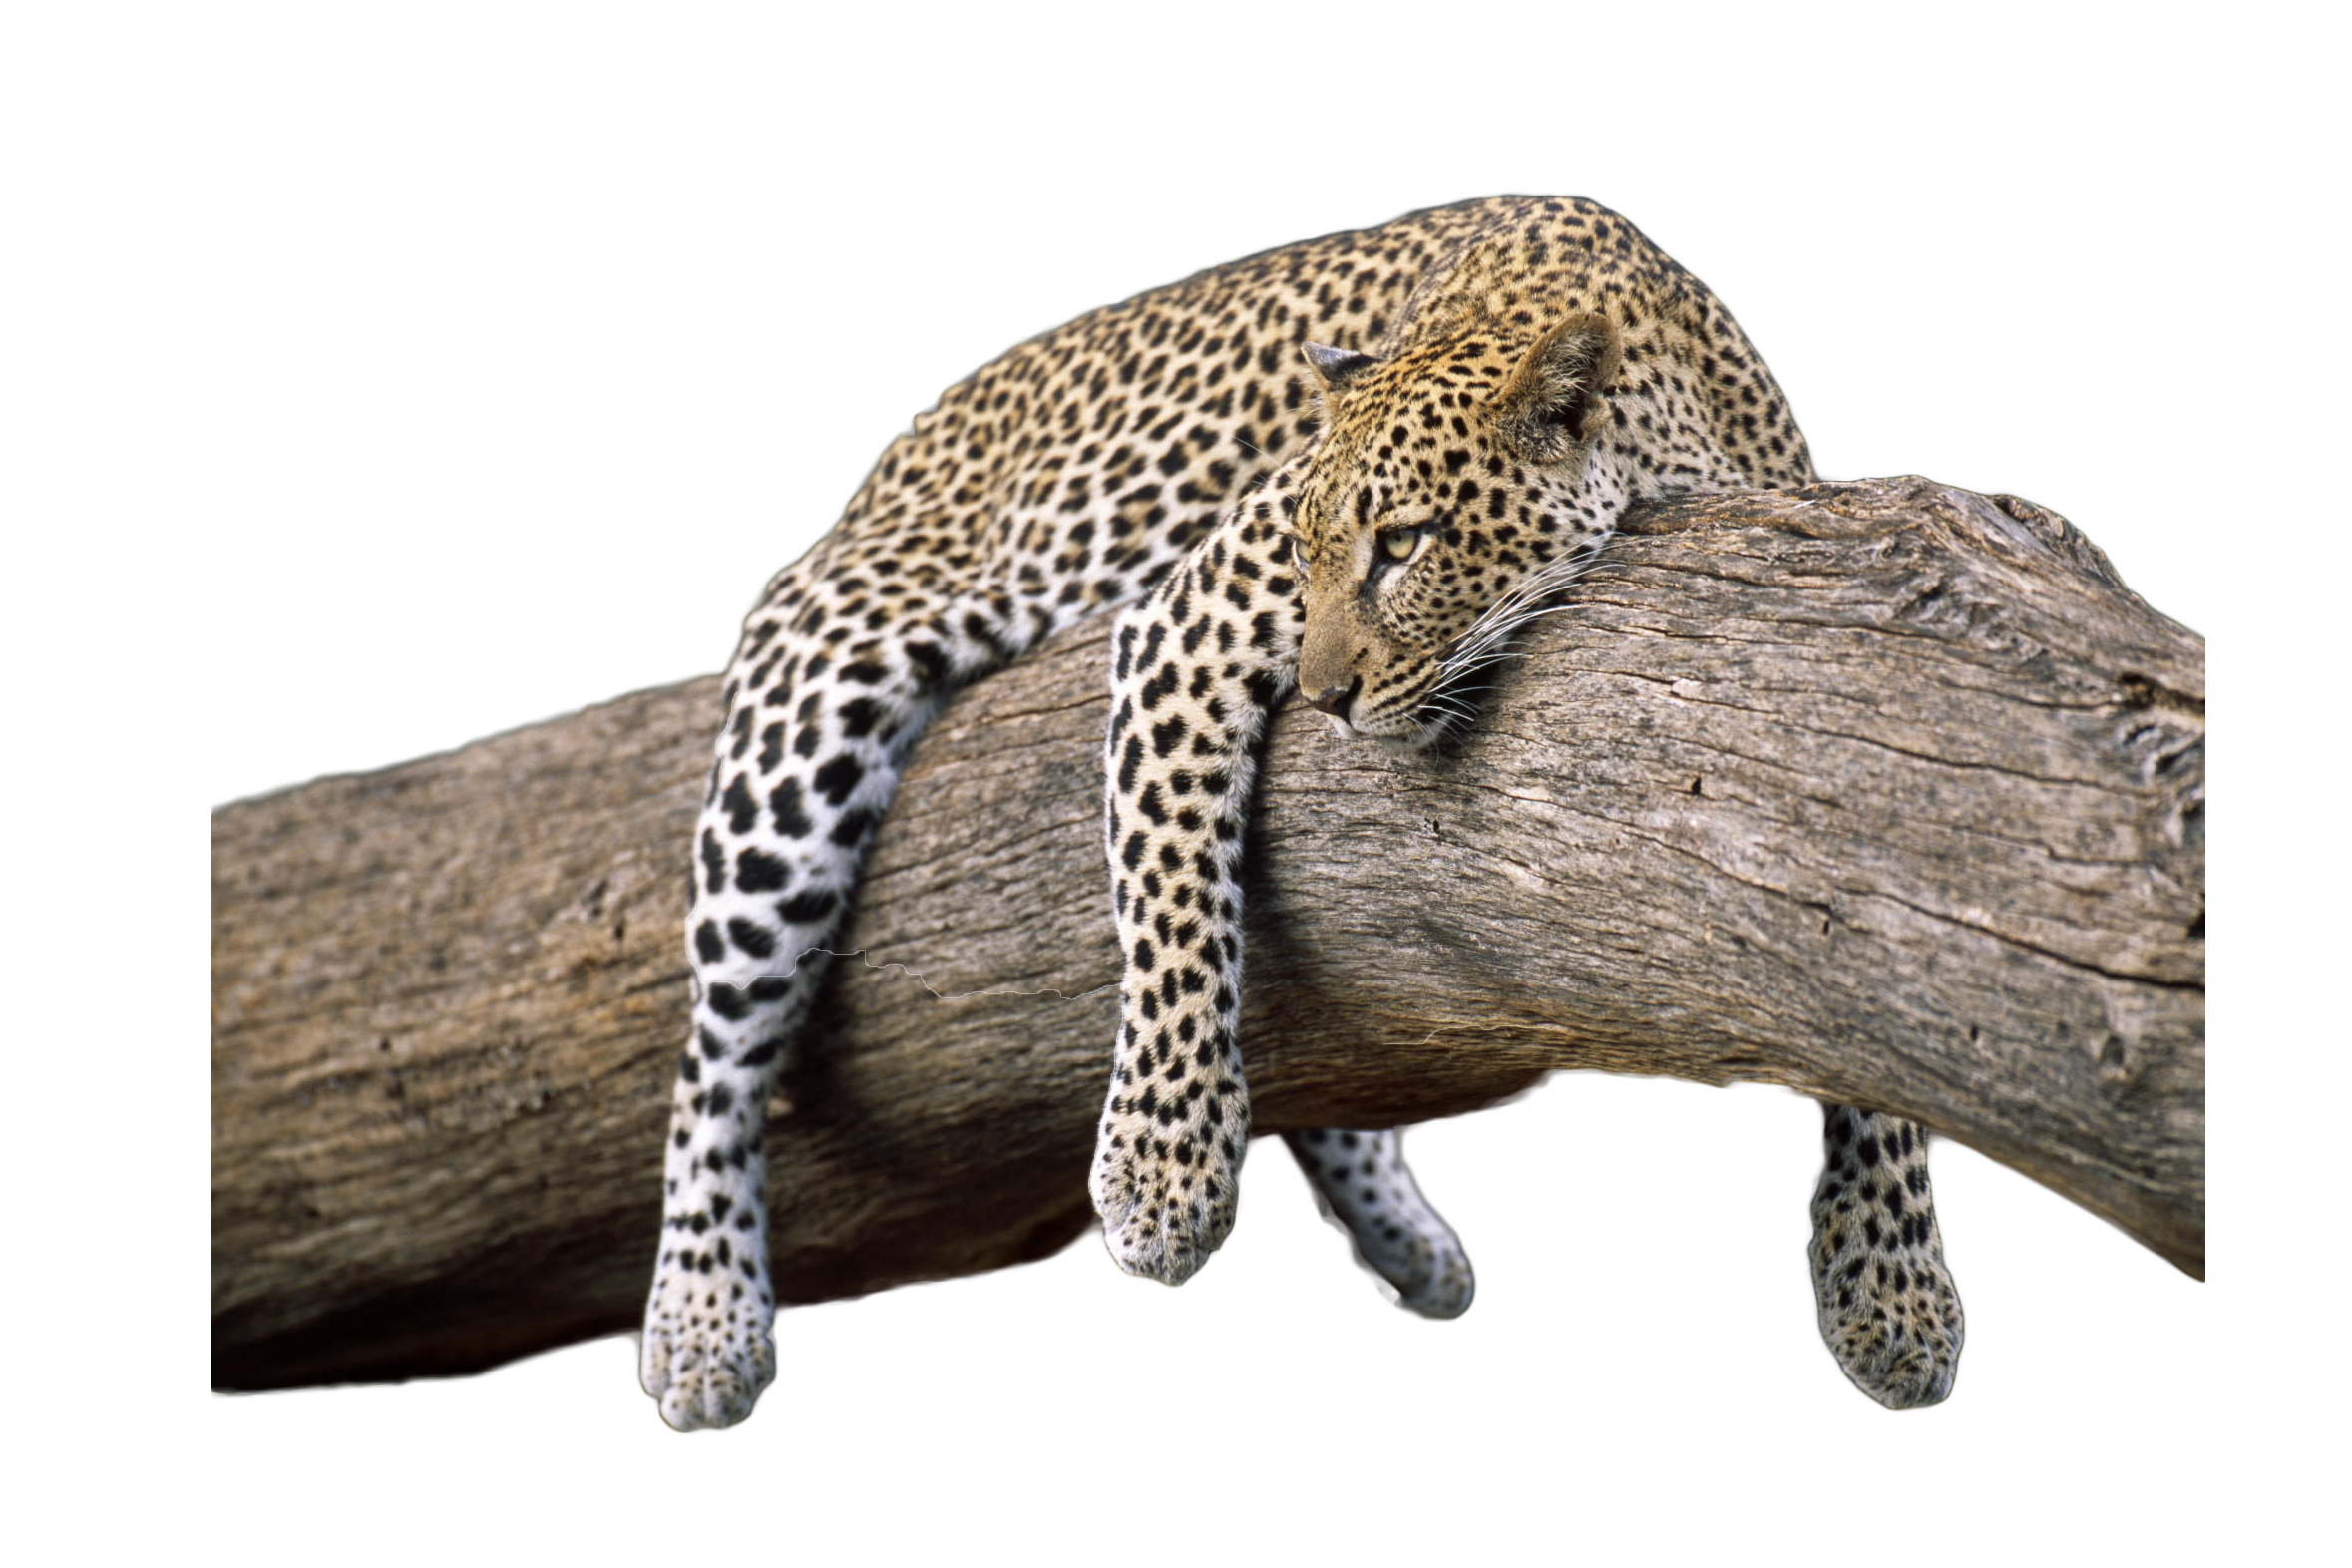 Leopard PNG Image in Transparent